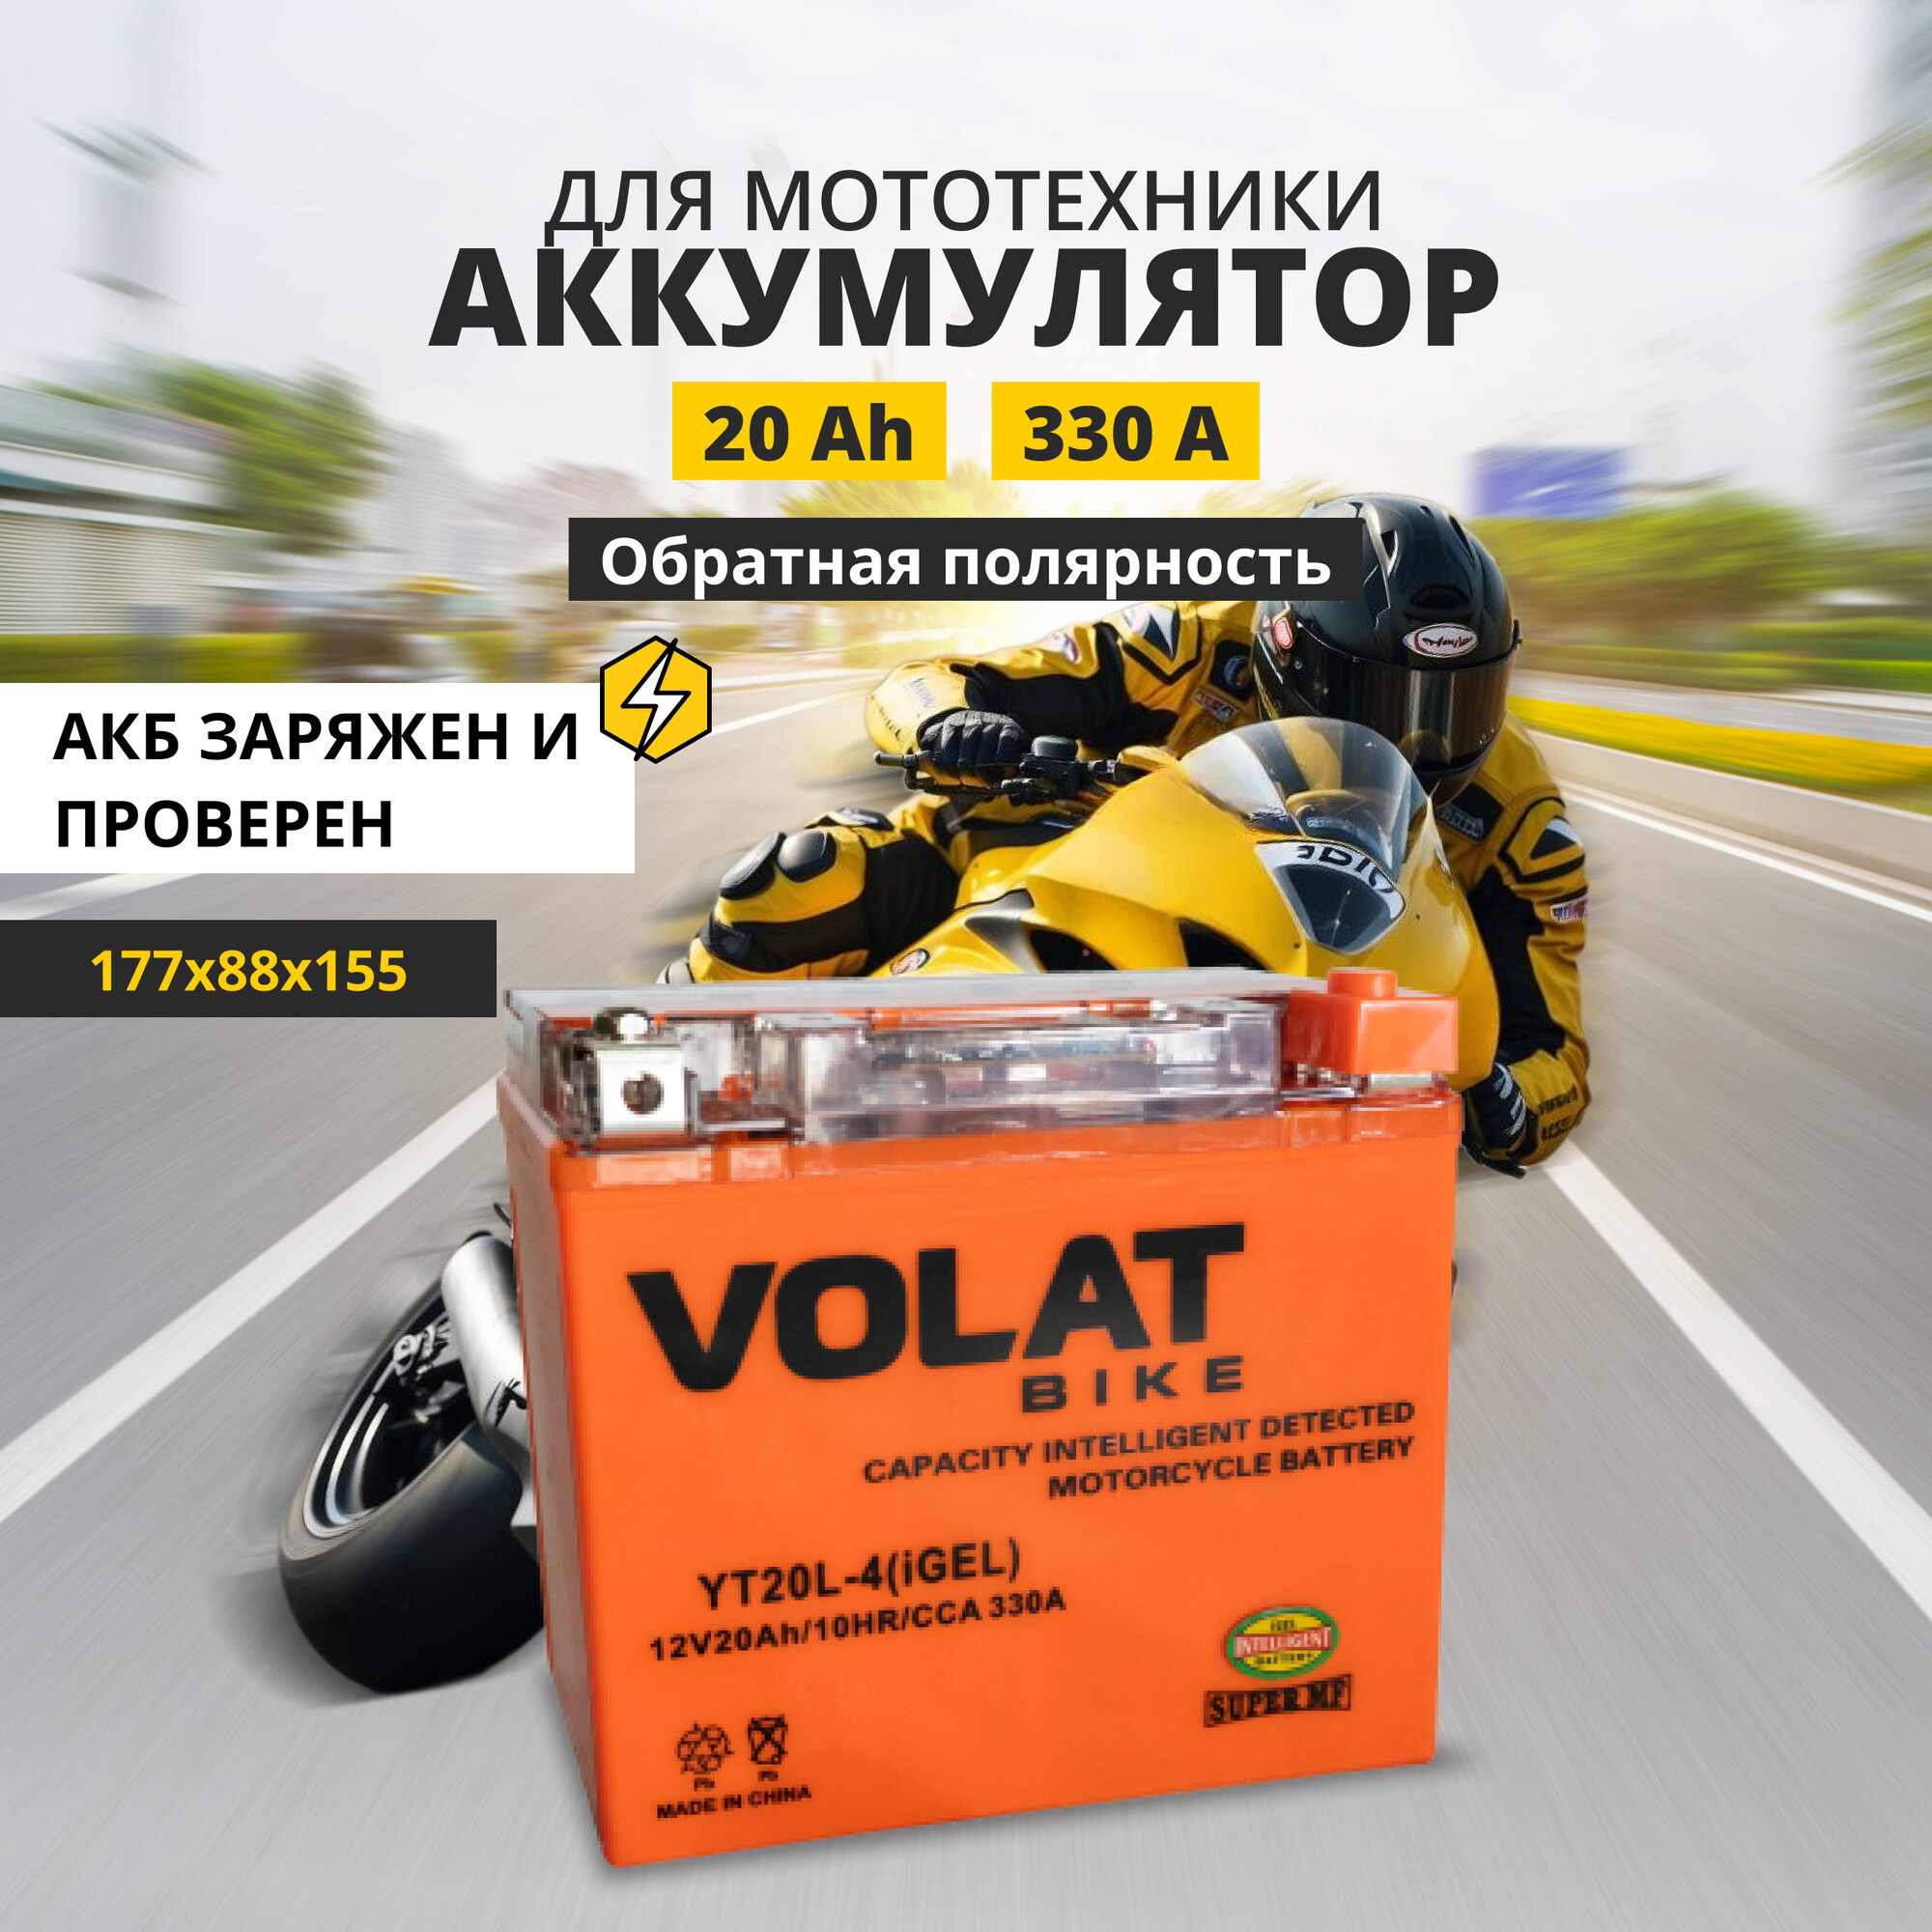 Аккумулятор для мотоцикла 12v Volat YT20L-4(iGEL) обратная полярность 20 Ah 330 A гелевый, акб на скутер, мопед, квадроцикл 177x88x155 мм